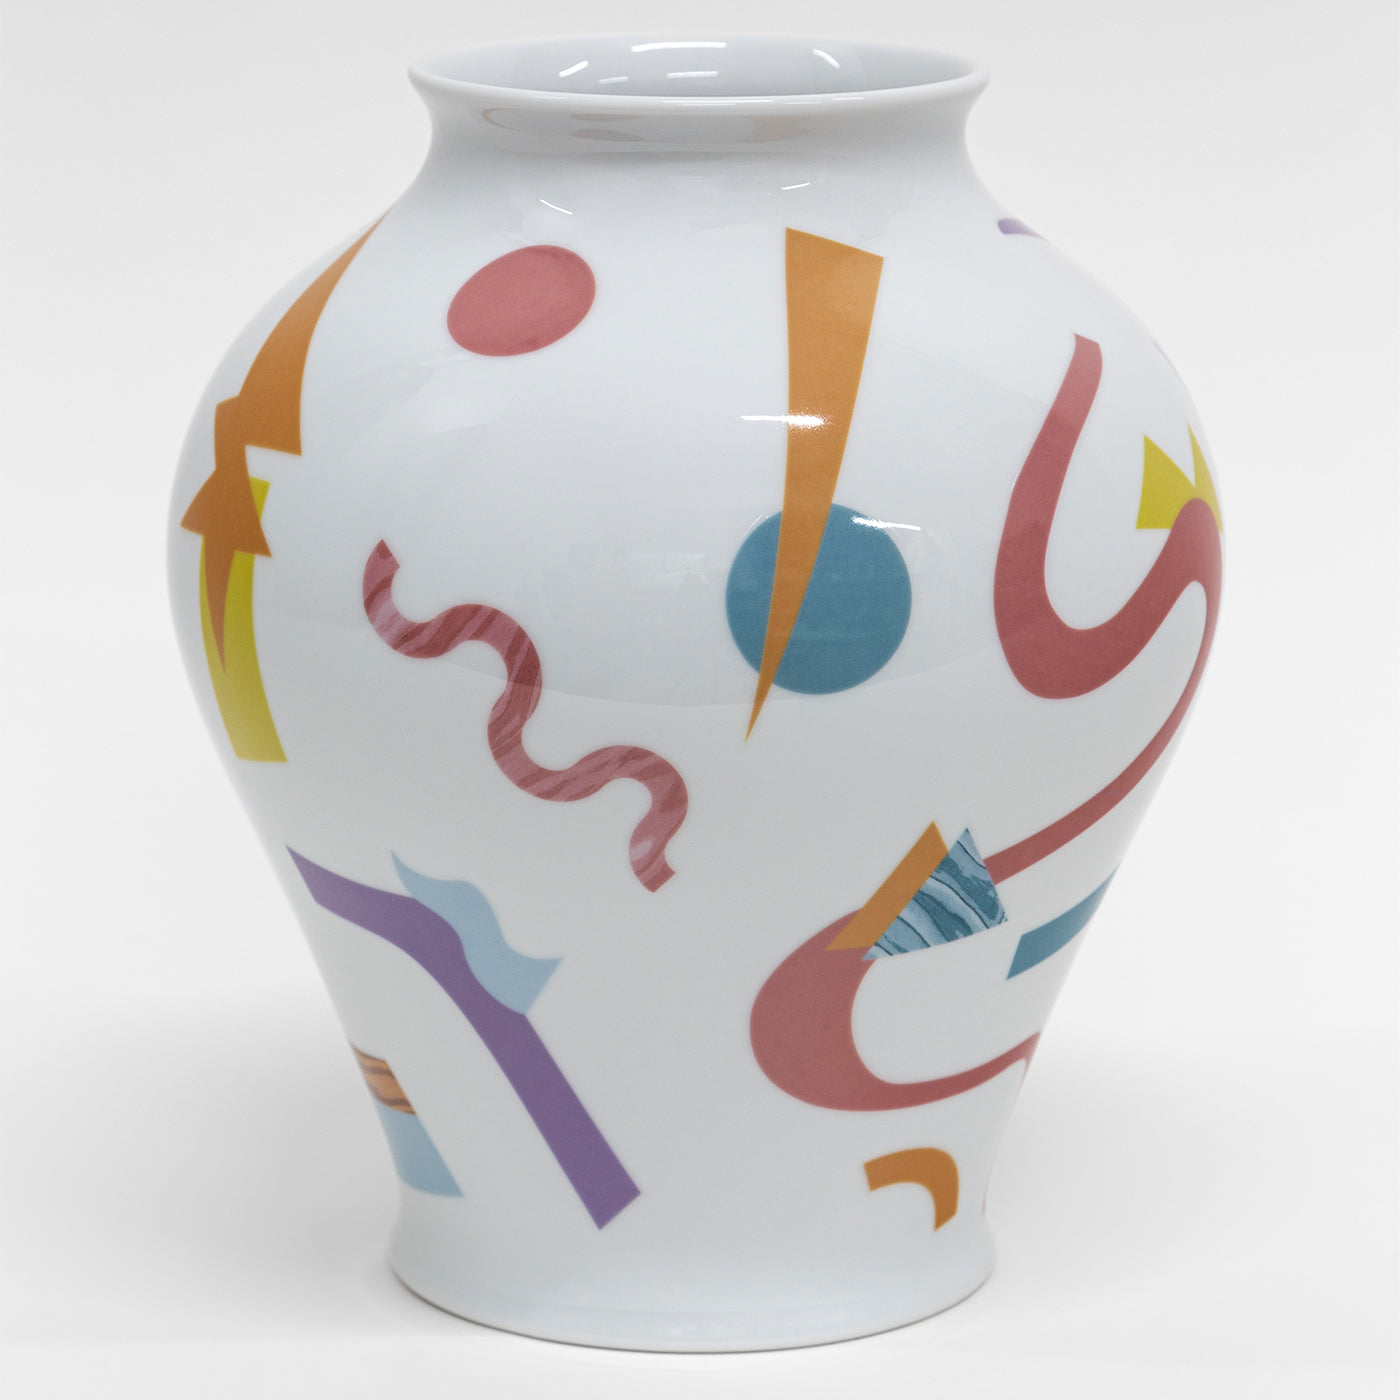 Alchimie Big Amphora Abstract Decor Porcelain Vase  - Alternative view 1